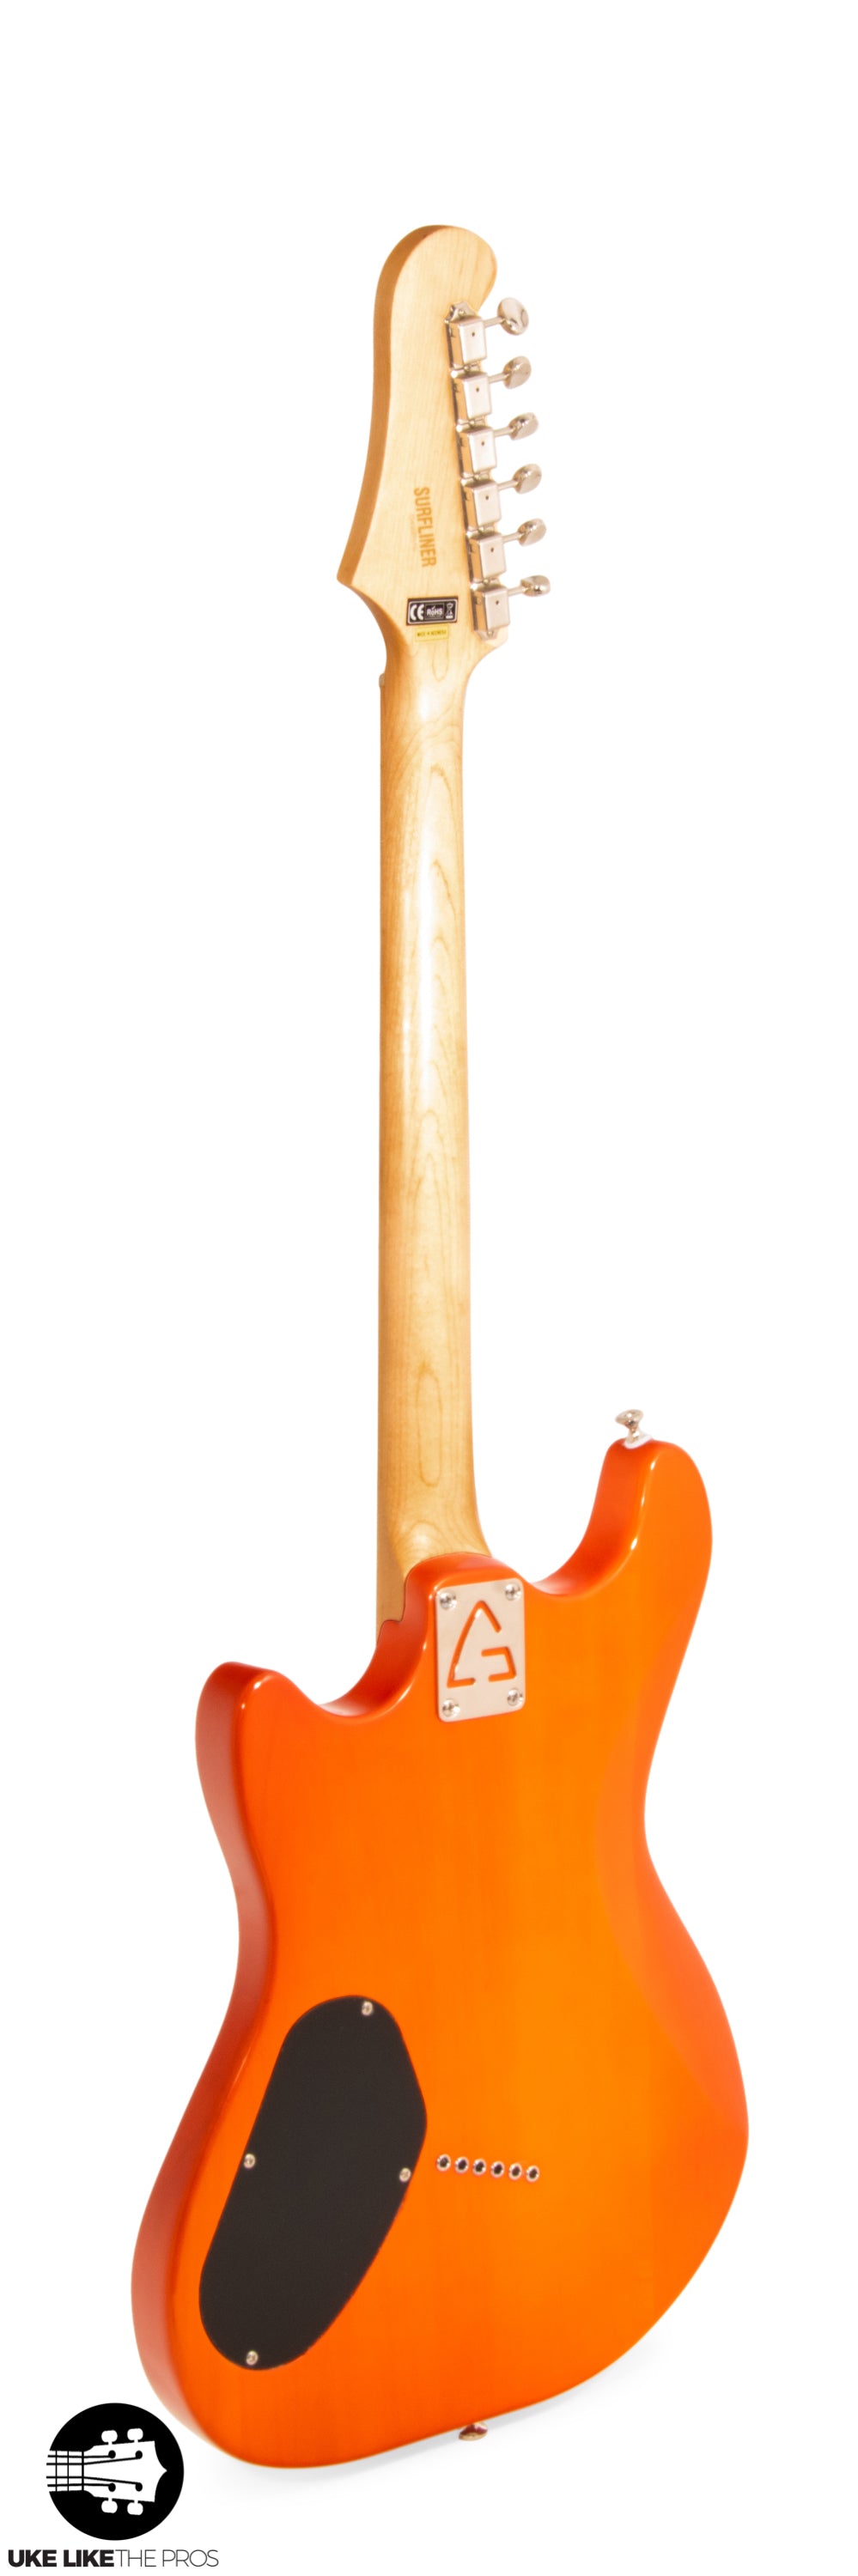 Guild Surfliner Electric Guitar Orange "Crazy Train"